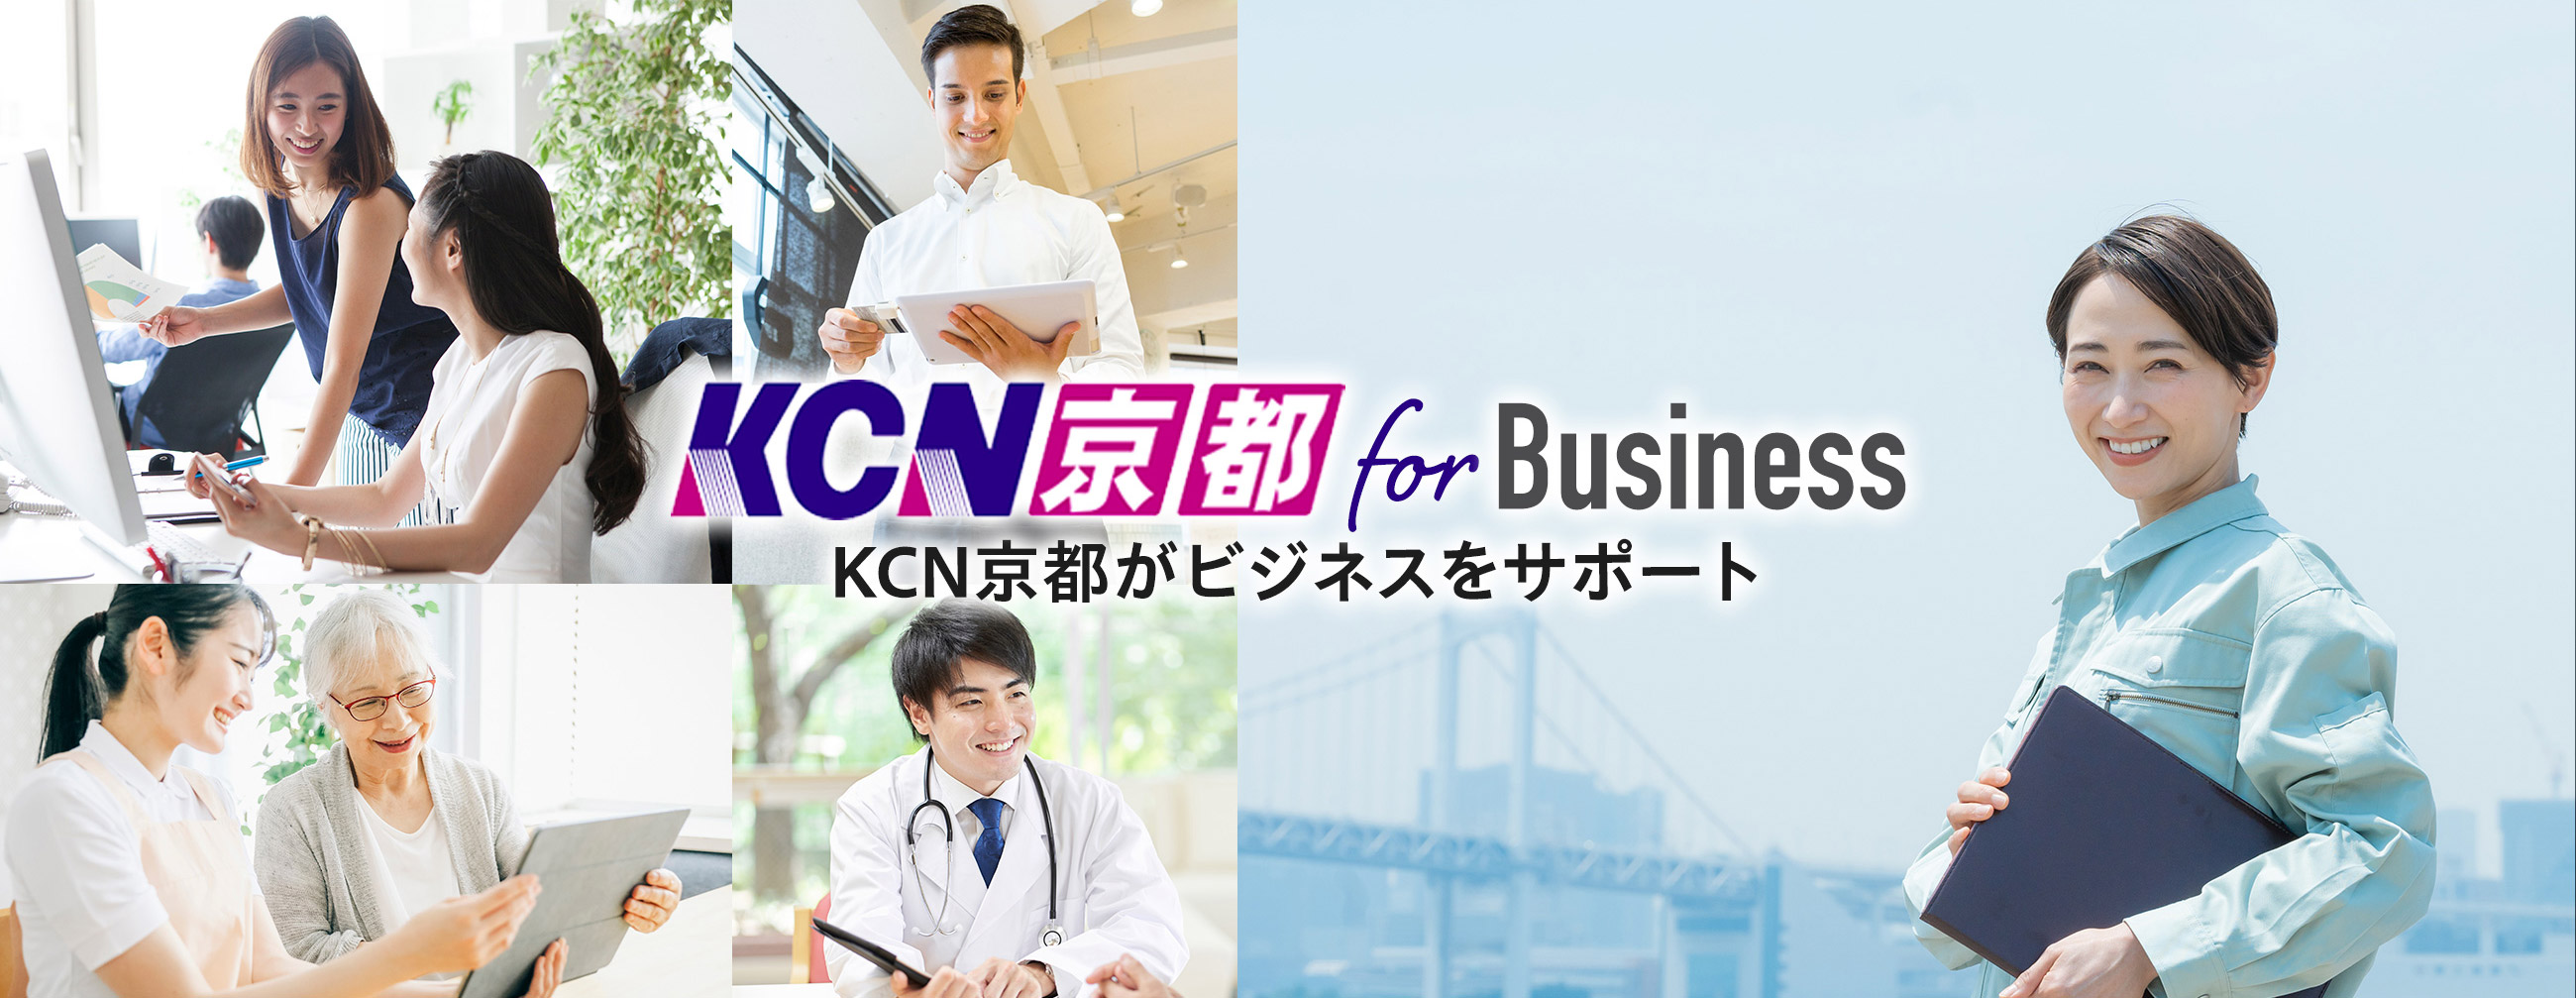 KCN京都法人向けサービス